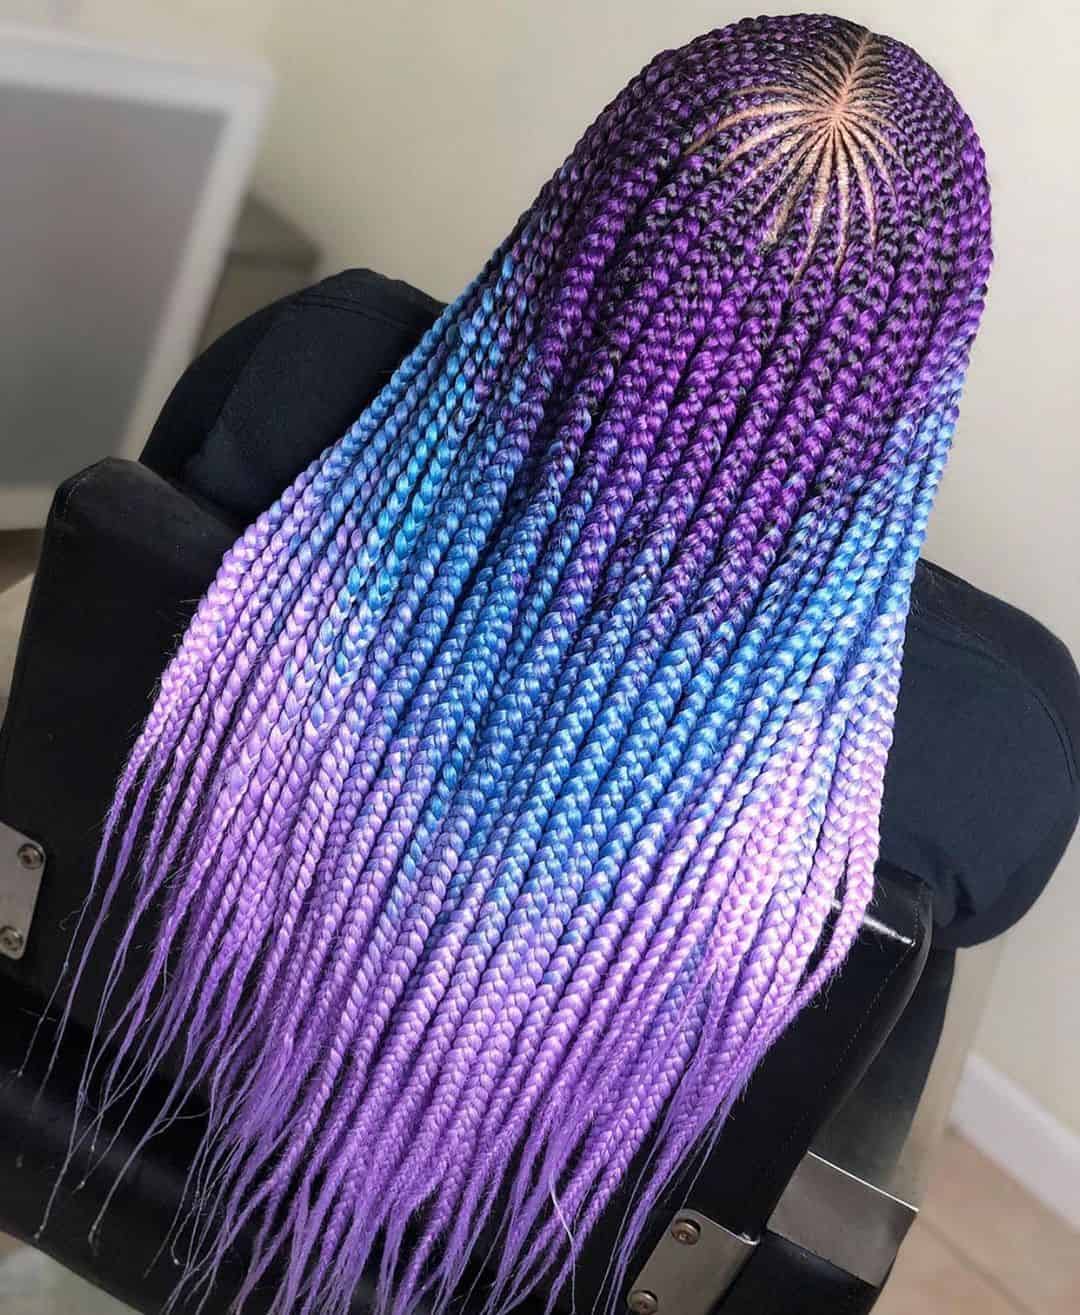 Multi-colored yarn braids